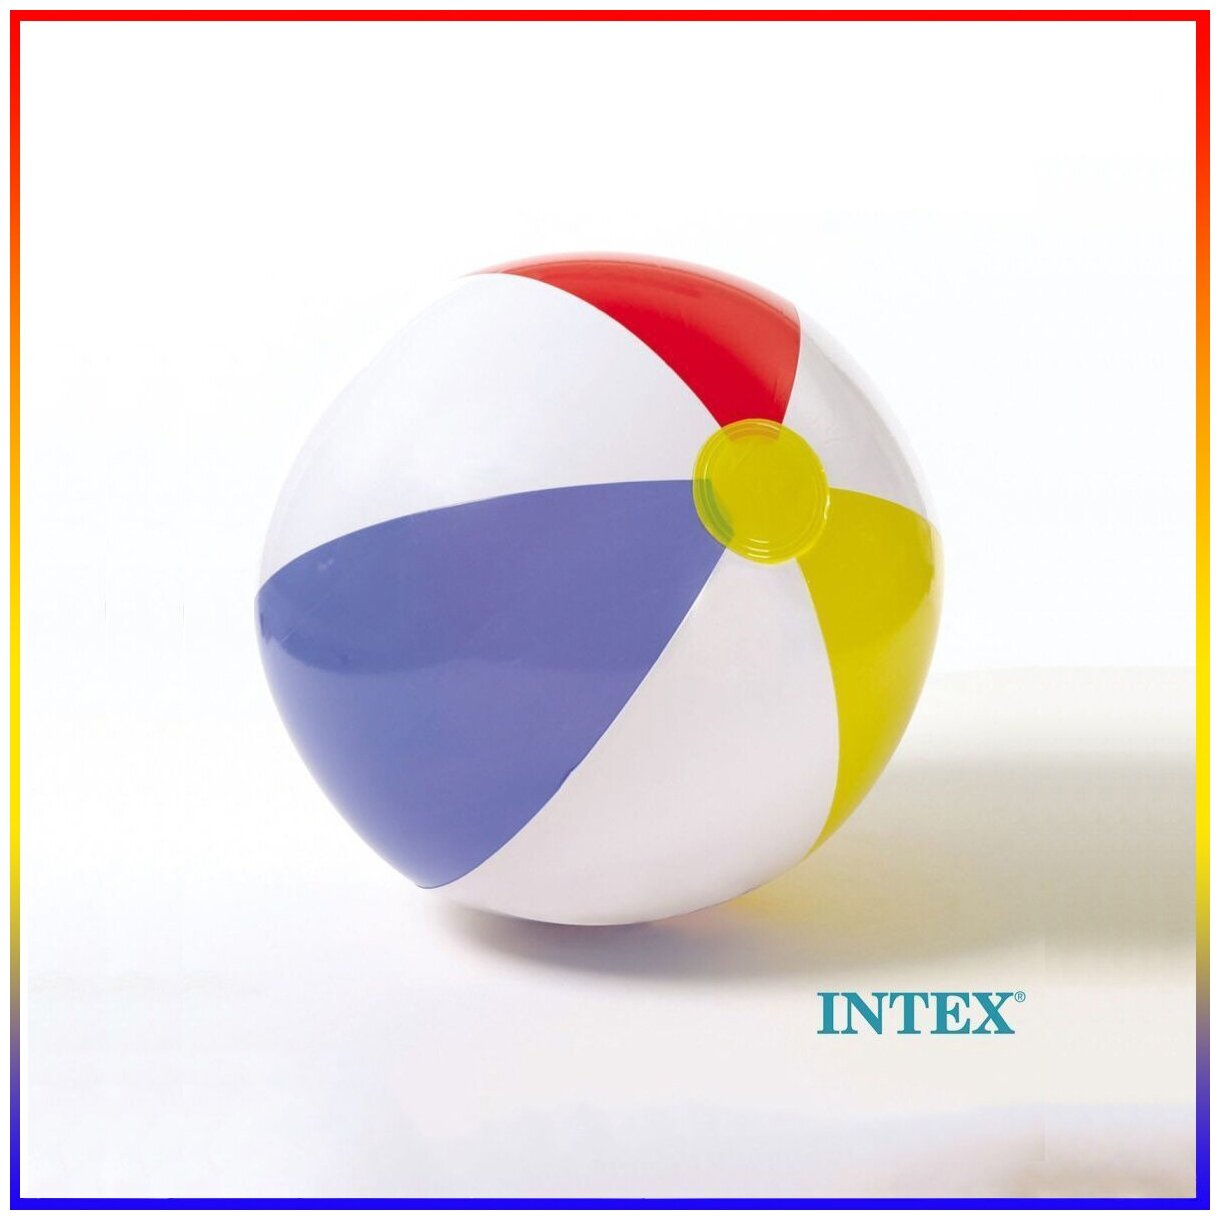 Мяч INTEX 59020 "Glossy" 32-35 см, 3+